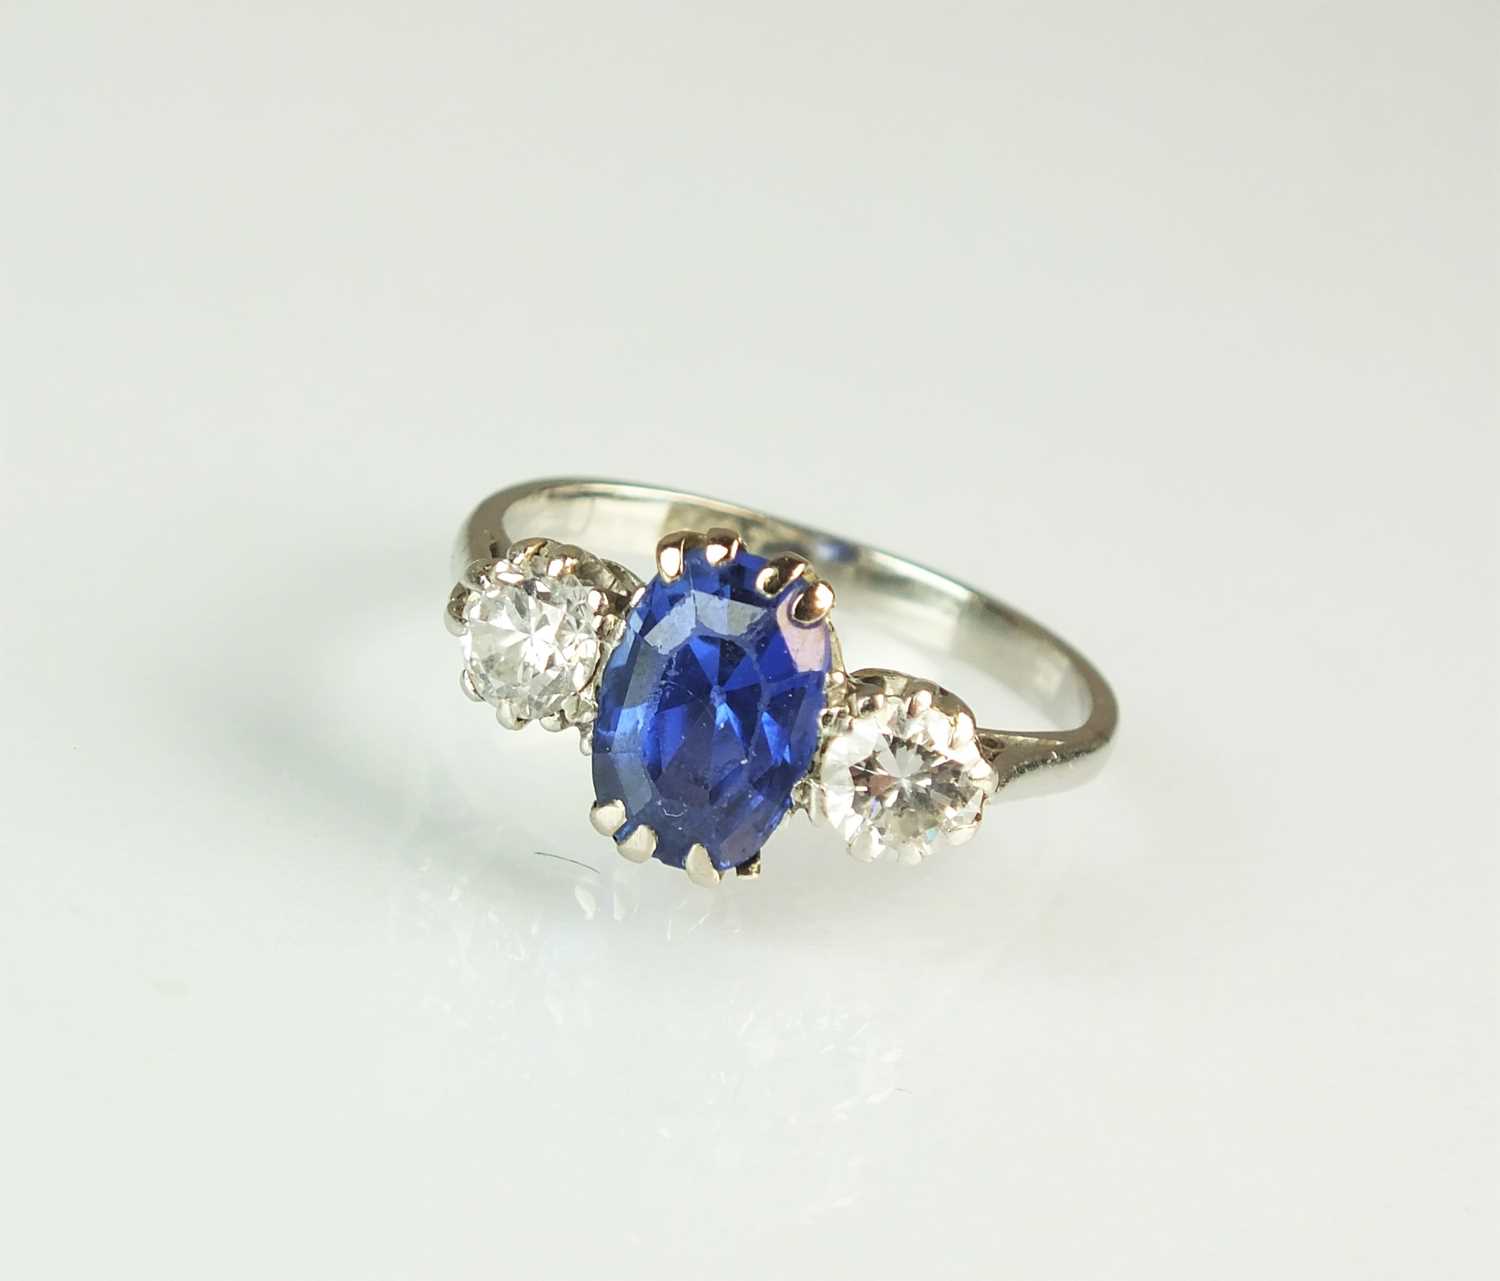 163 - A three stone sapphire and diamond ring